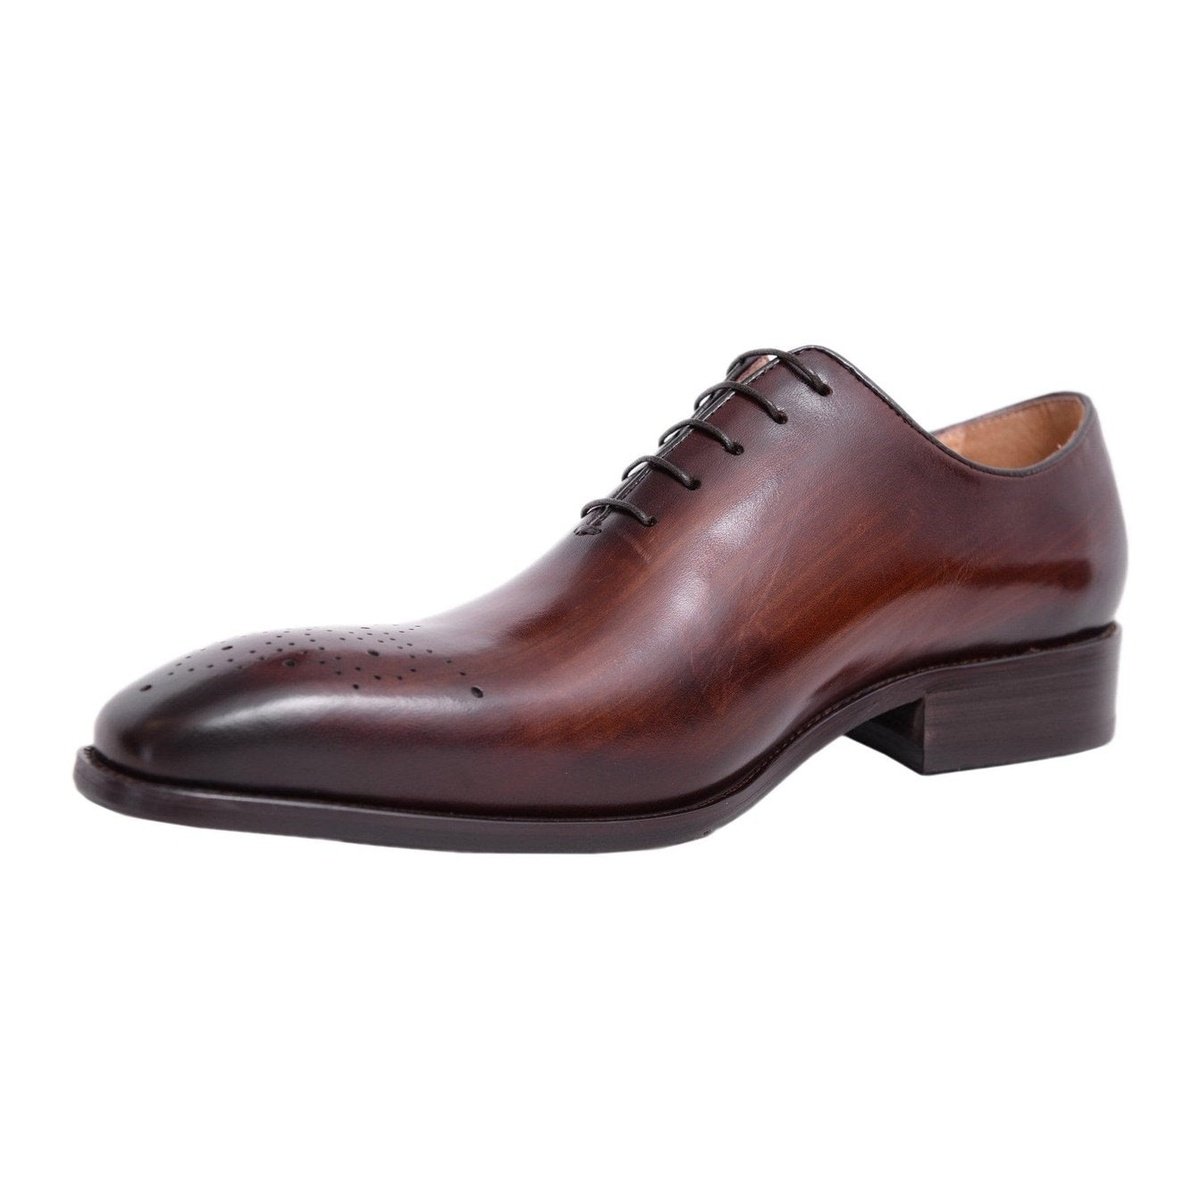 Carrucci Shoes For Amazon Carrucci Mens Brown Chestnut Whole Cut Oxford Leather Dress Shoes